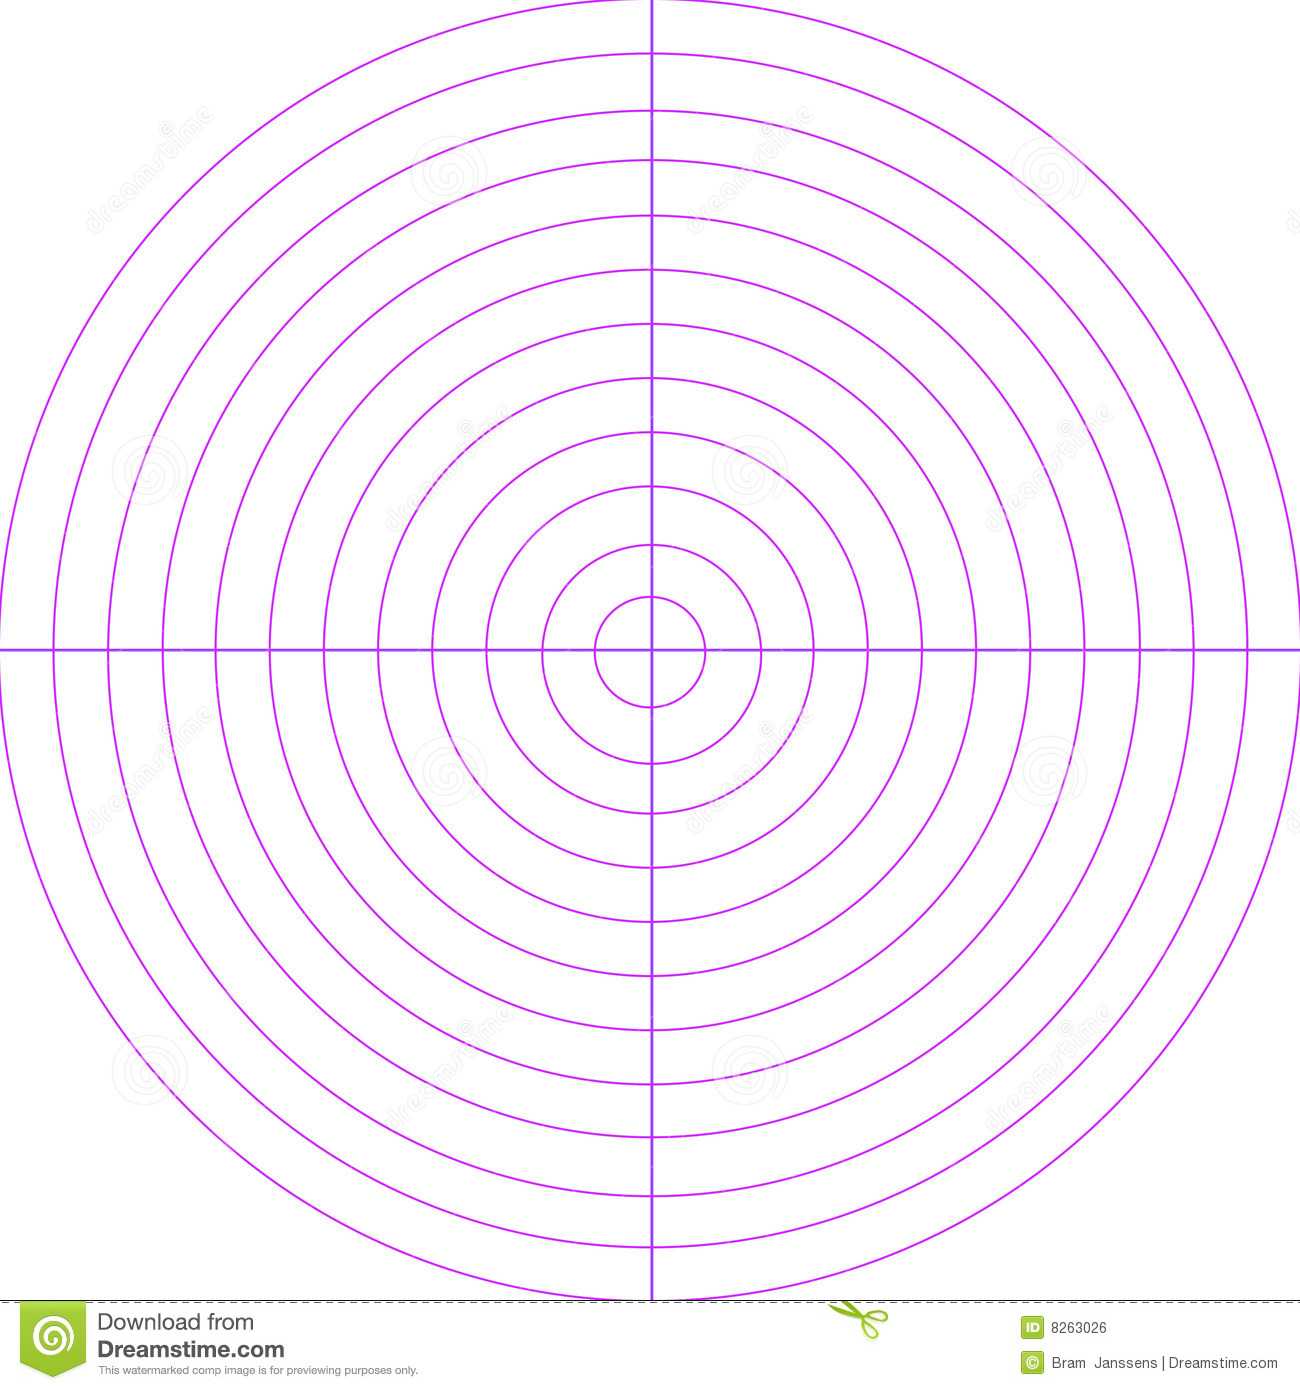 Blank Radar Screen Stock Illustration. Illustration Of With Blank Radar Chart Template